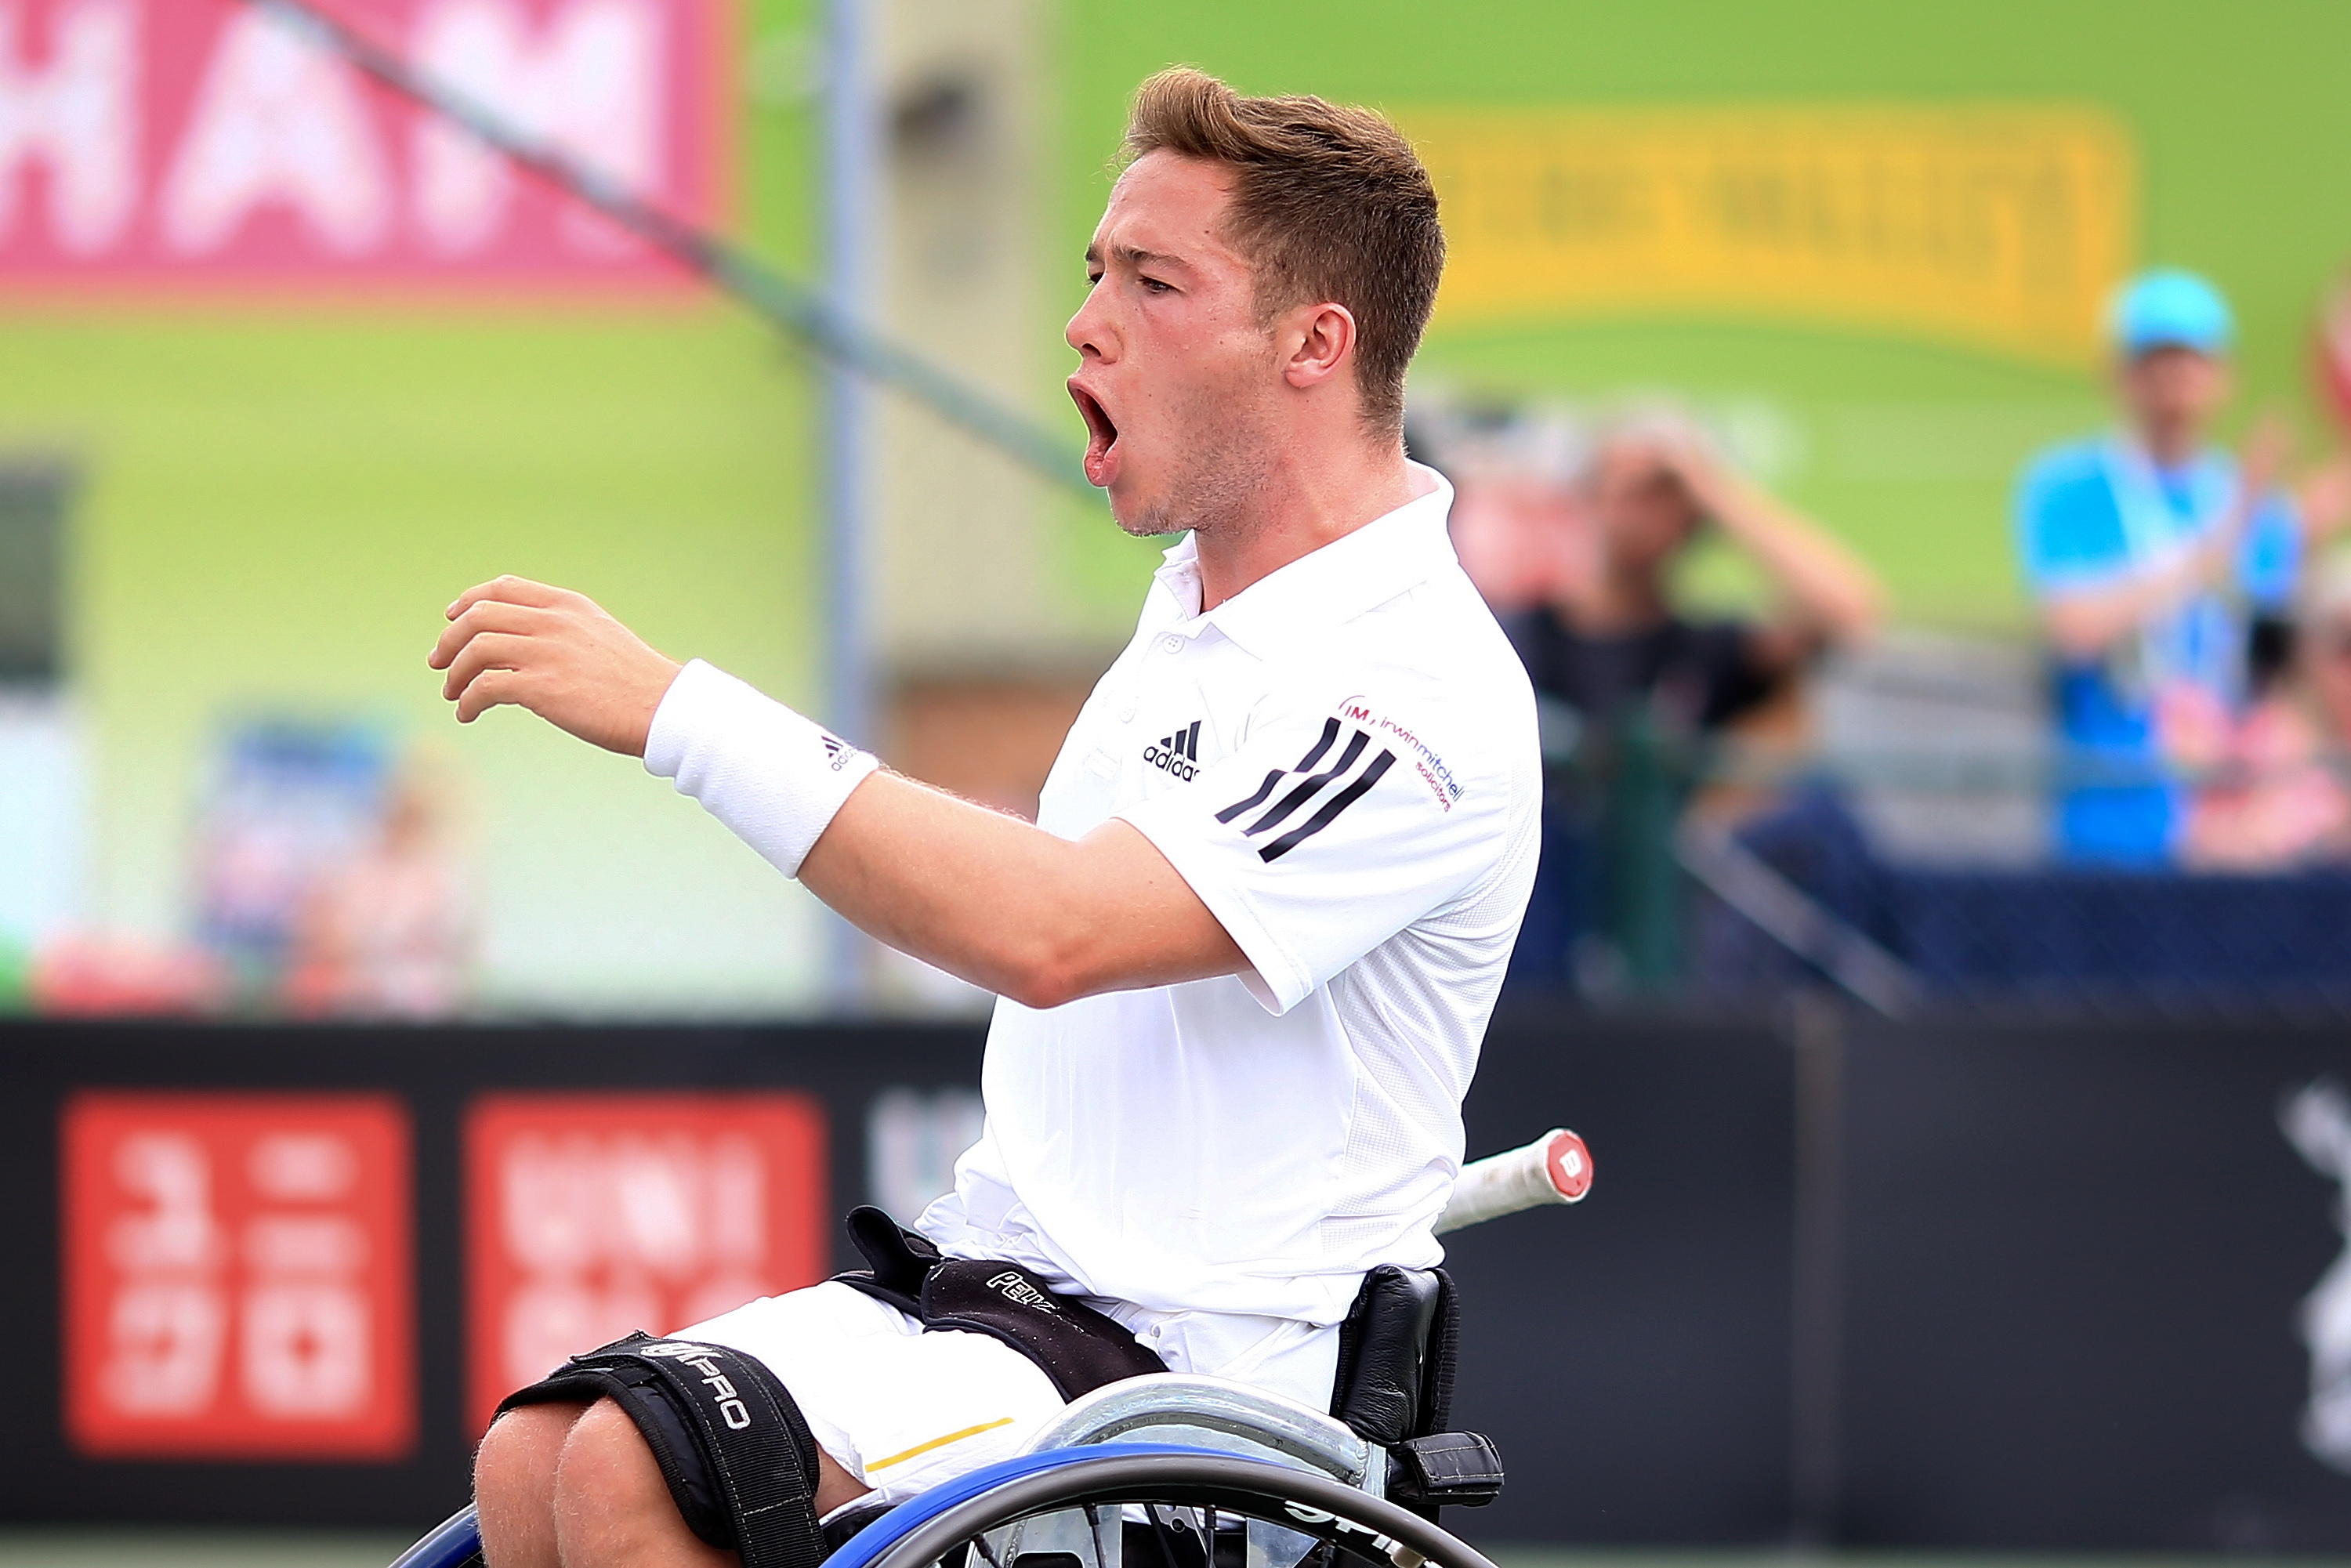 male wheelchair tennis player Alfie Hewett yells in triumph after winning a point